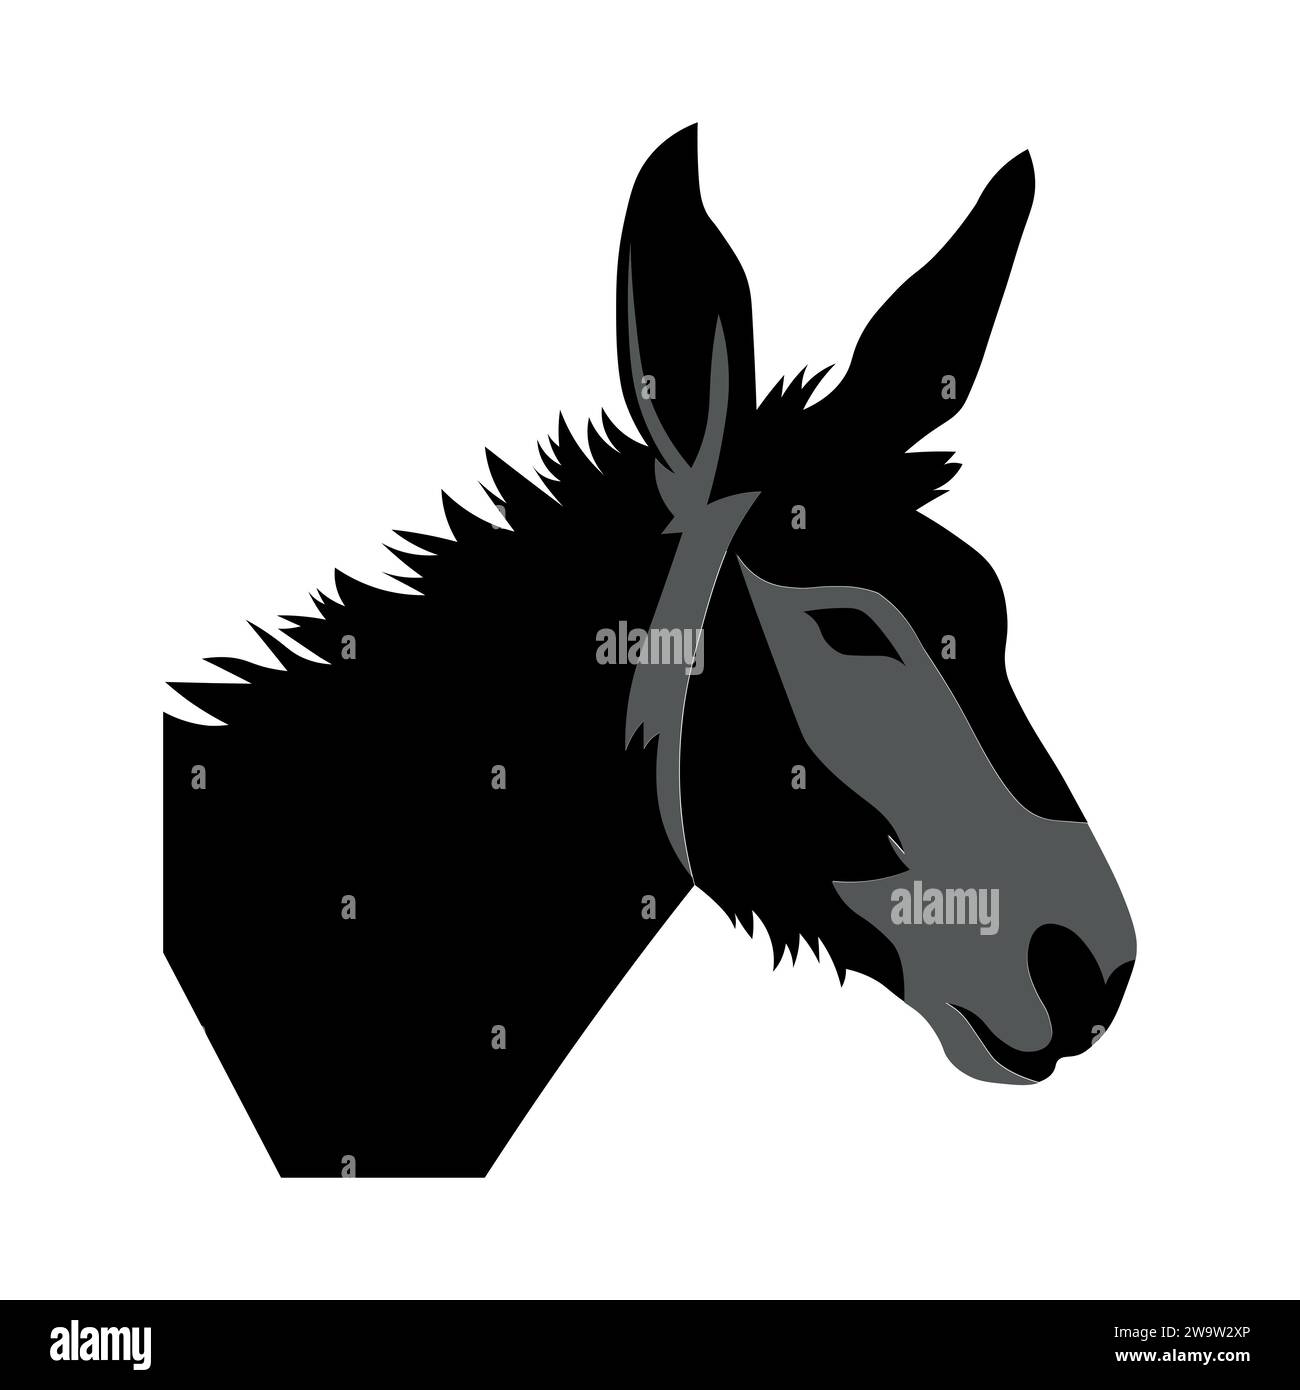 Donkey black vector icon on white background Stock Vector